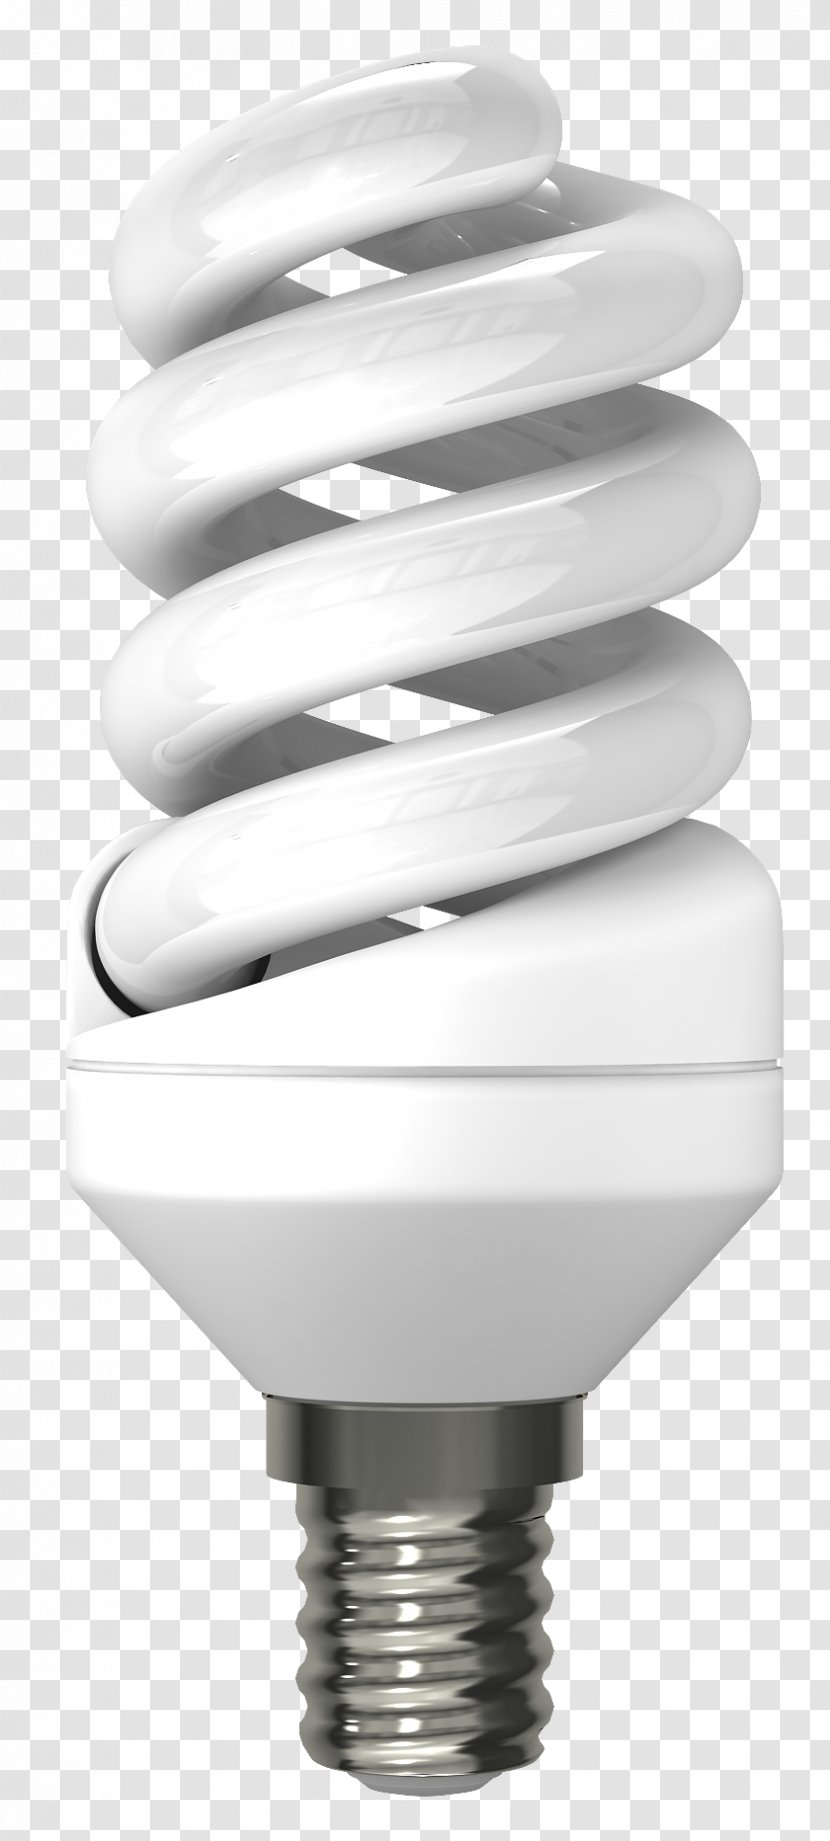 Incandescent Light Bulb Lighting - Compact Fluorescent Lamp - Daylight Image Transparent PNG